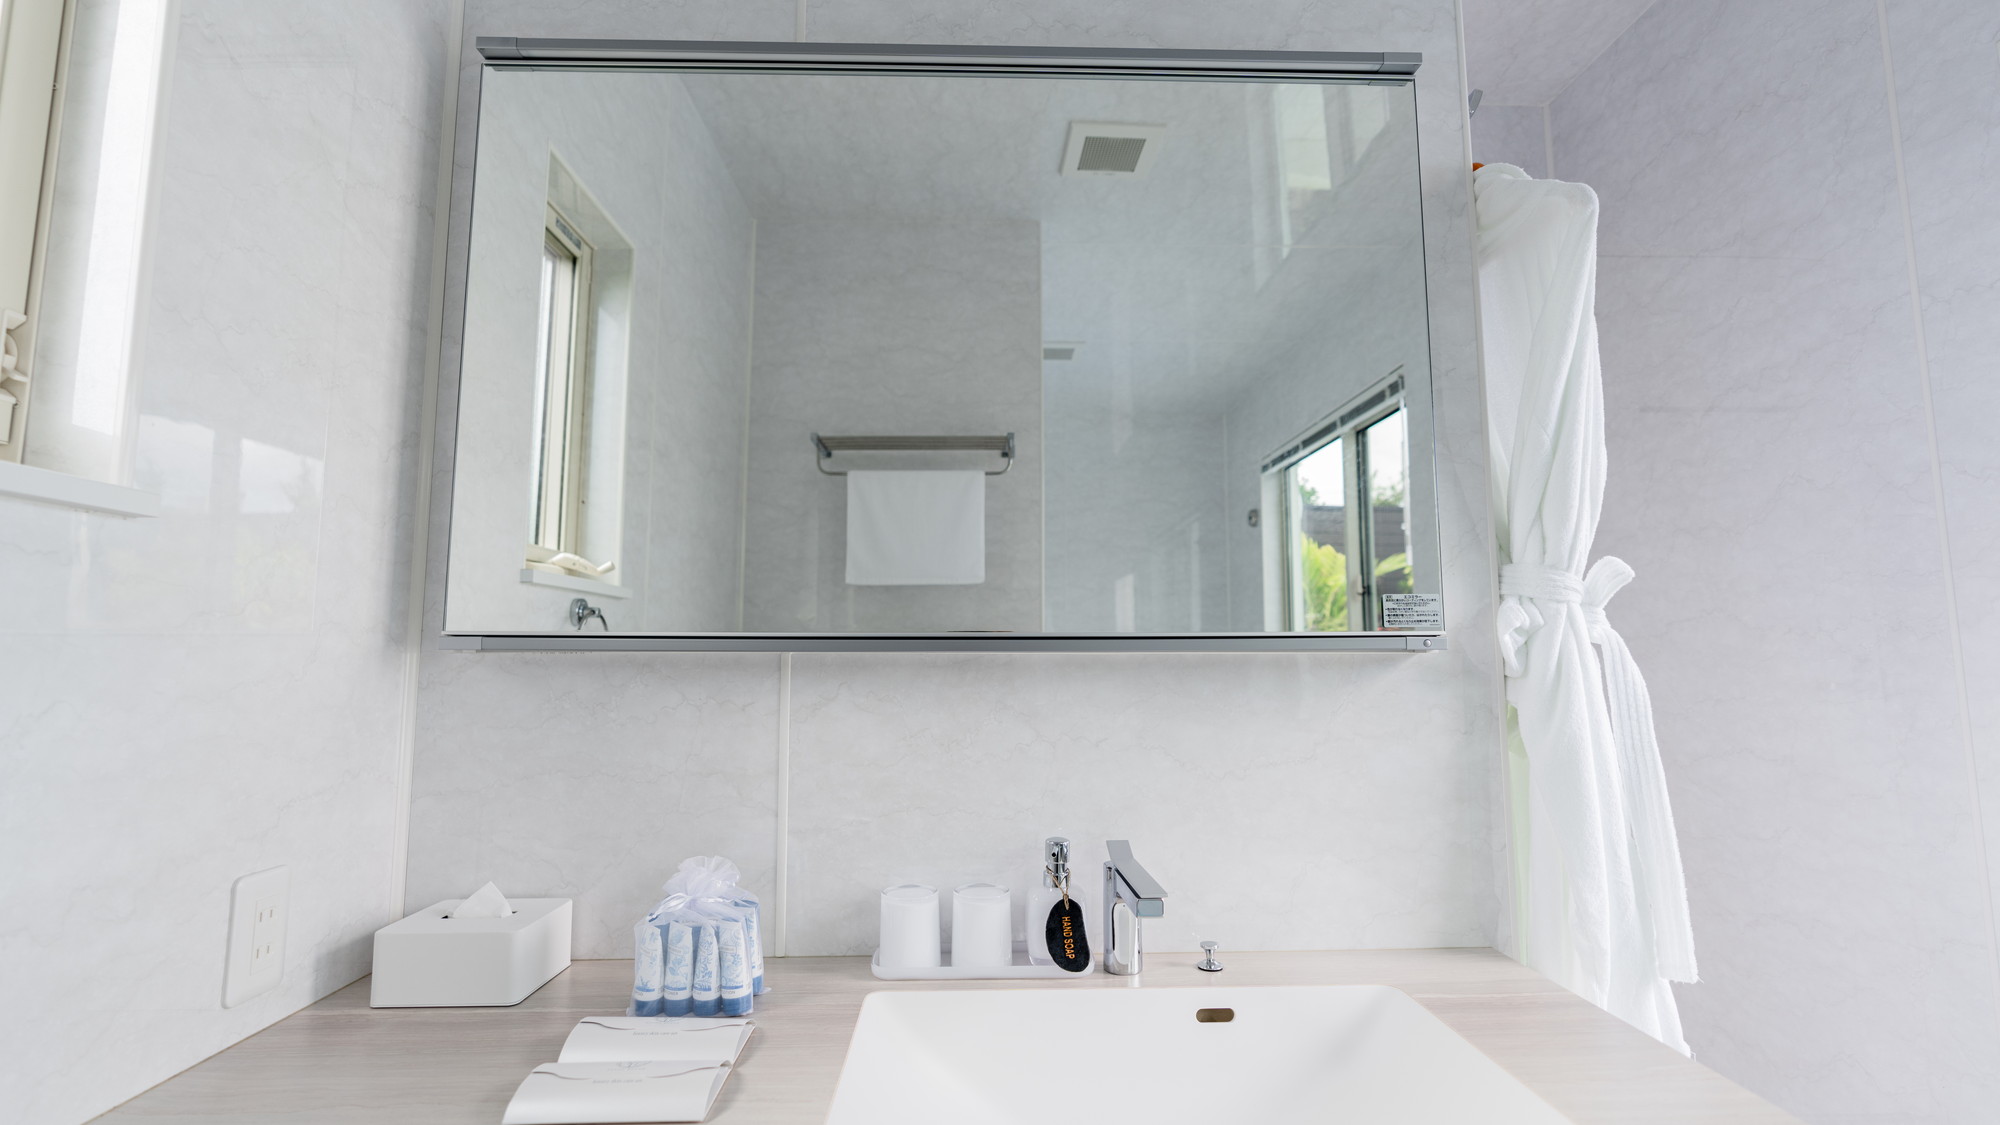 【Premiere Suite Villa】ダブルシンクの洗面台にトイレは2か所あります。